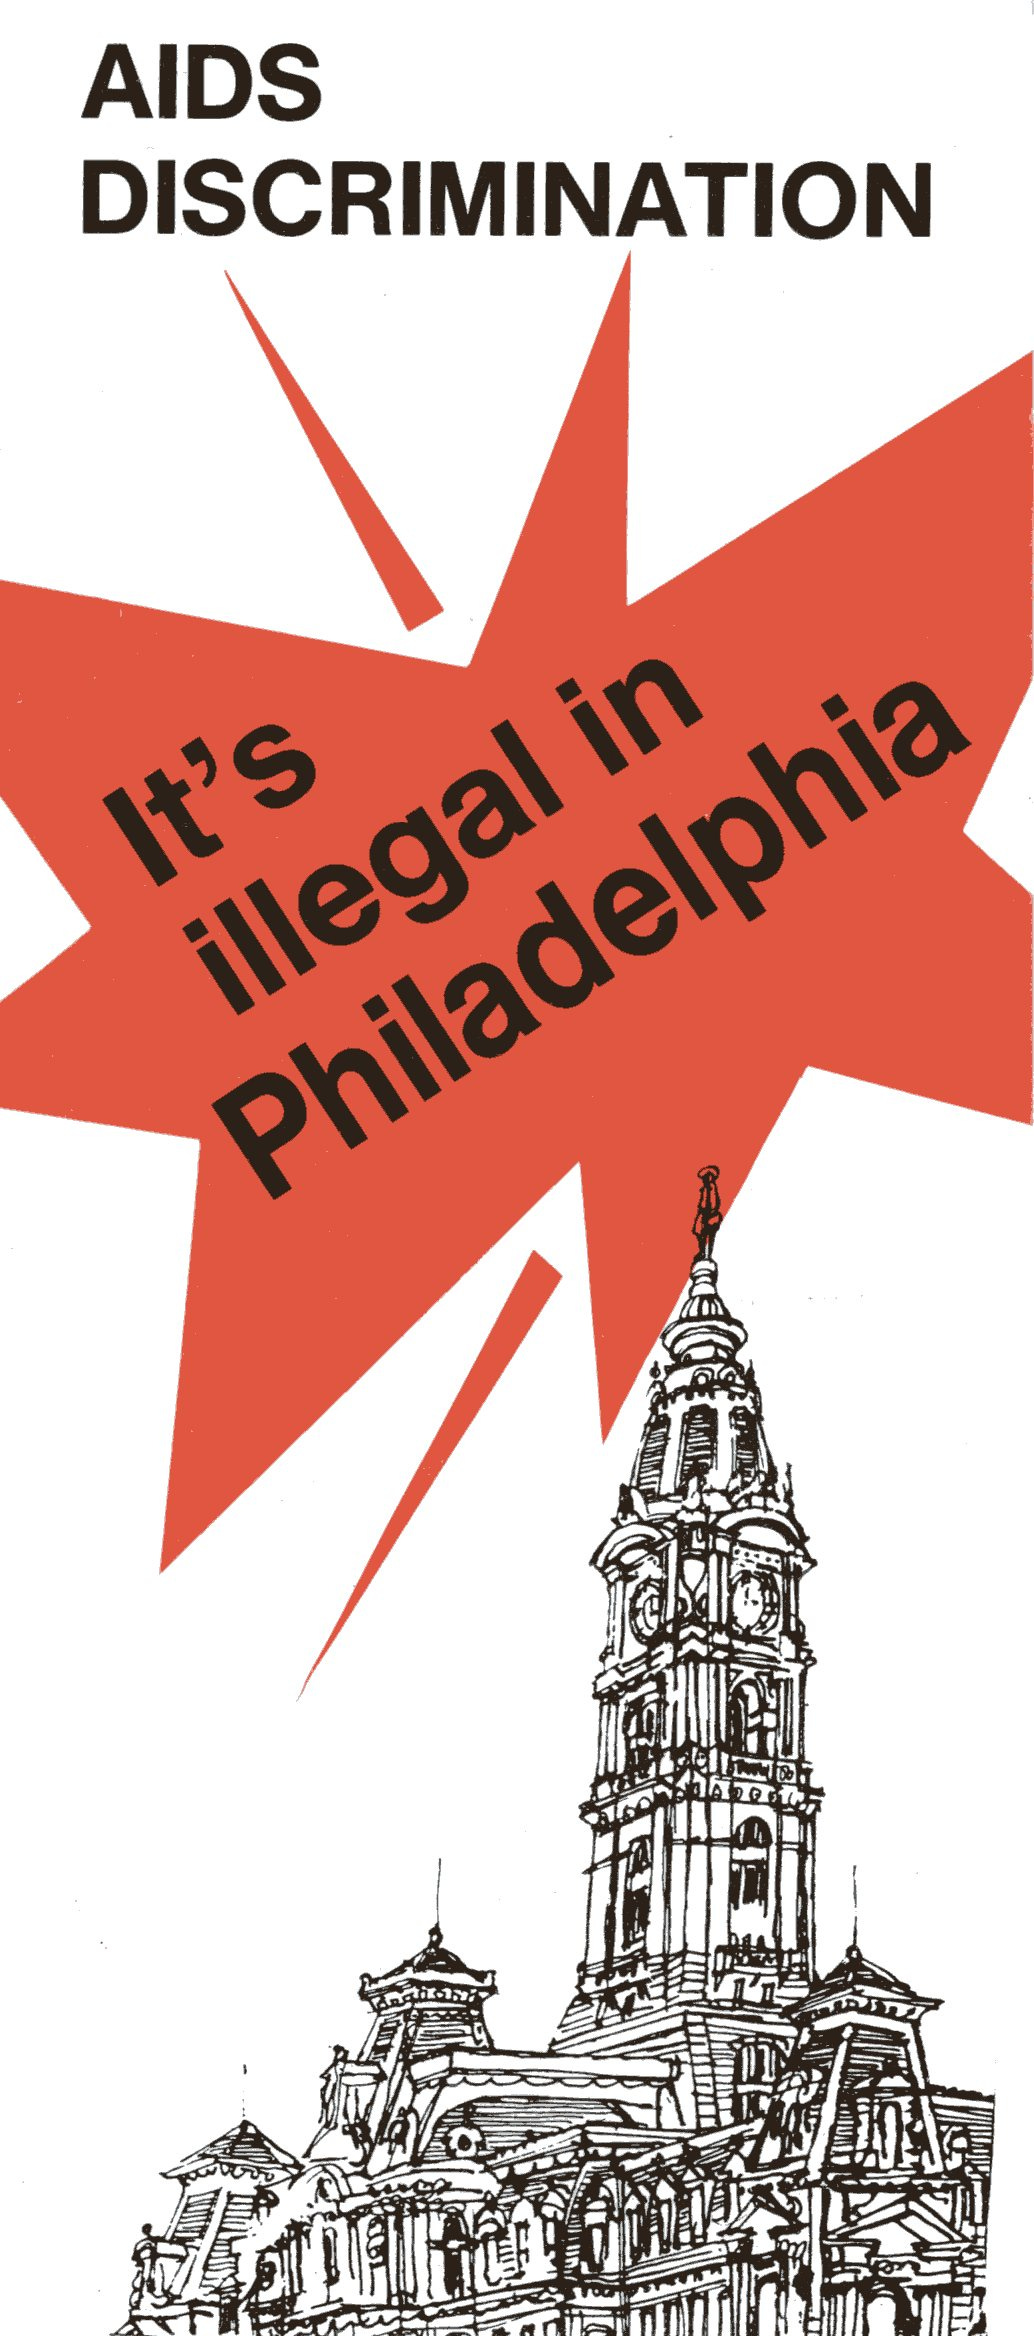 Philadelphia Human Relations Commission pamphlet on AIDS discrimination